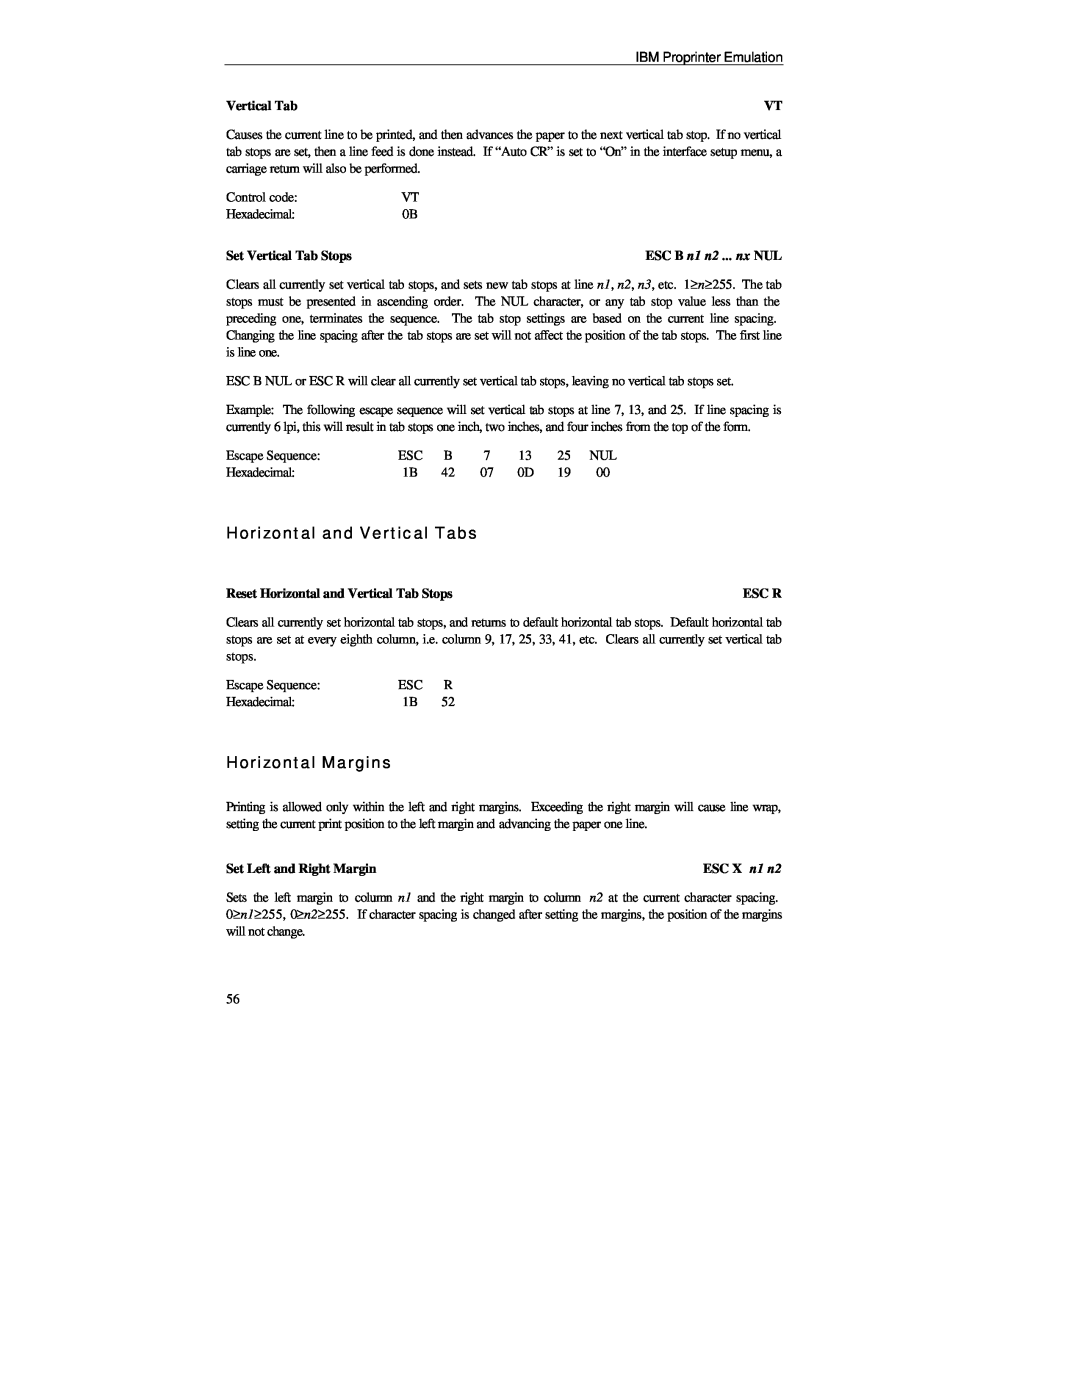 Printek FormsMaster 8000se Series manual Horizontal and Vertical Tabs, Horizontal Margins, Set Vertical Tab Stops, Esc R 